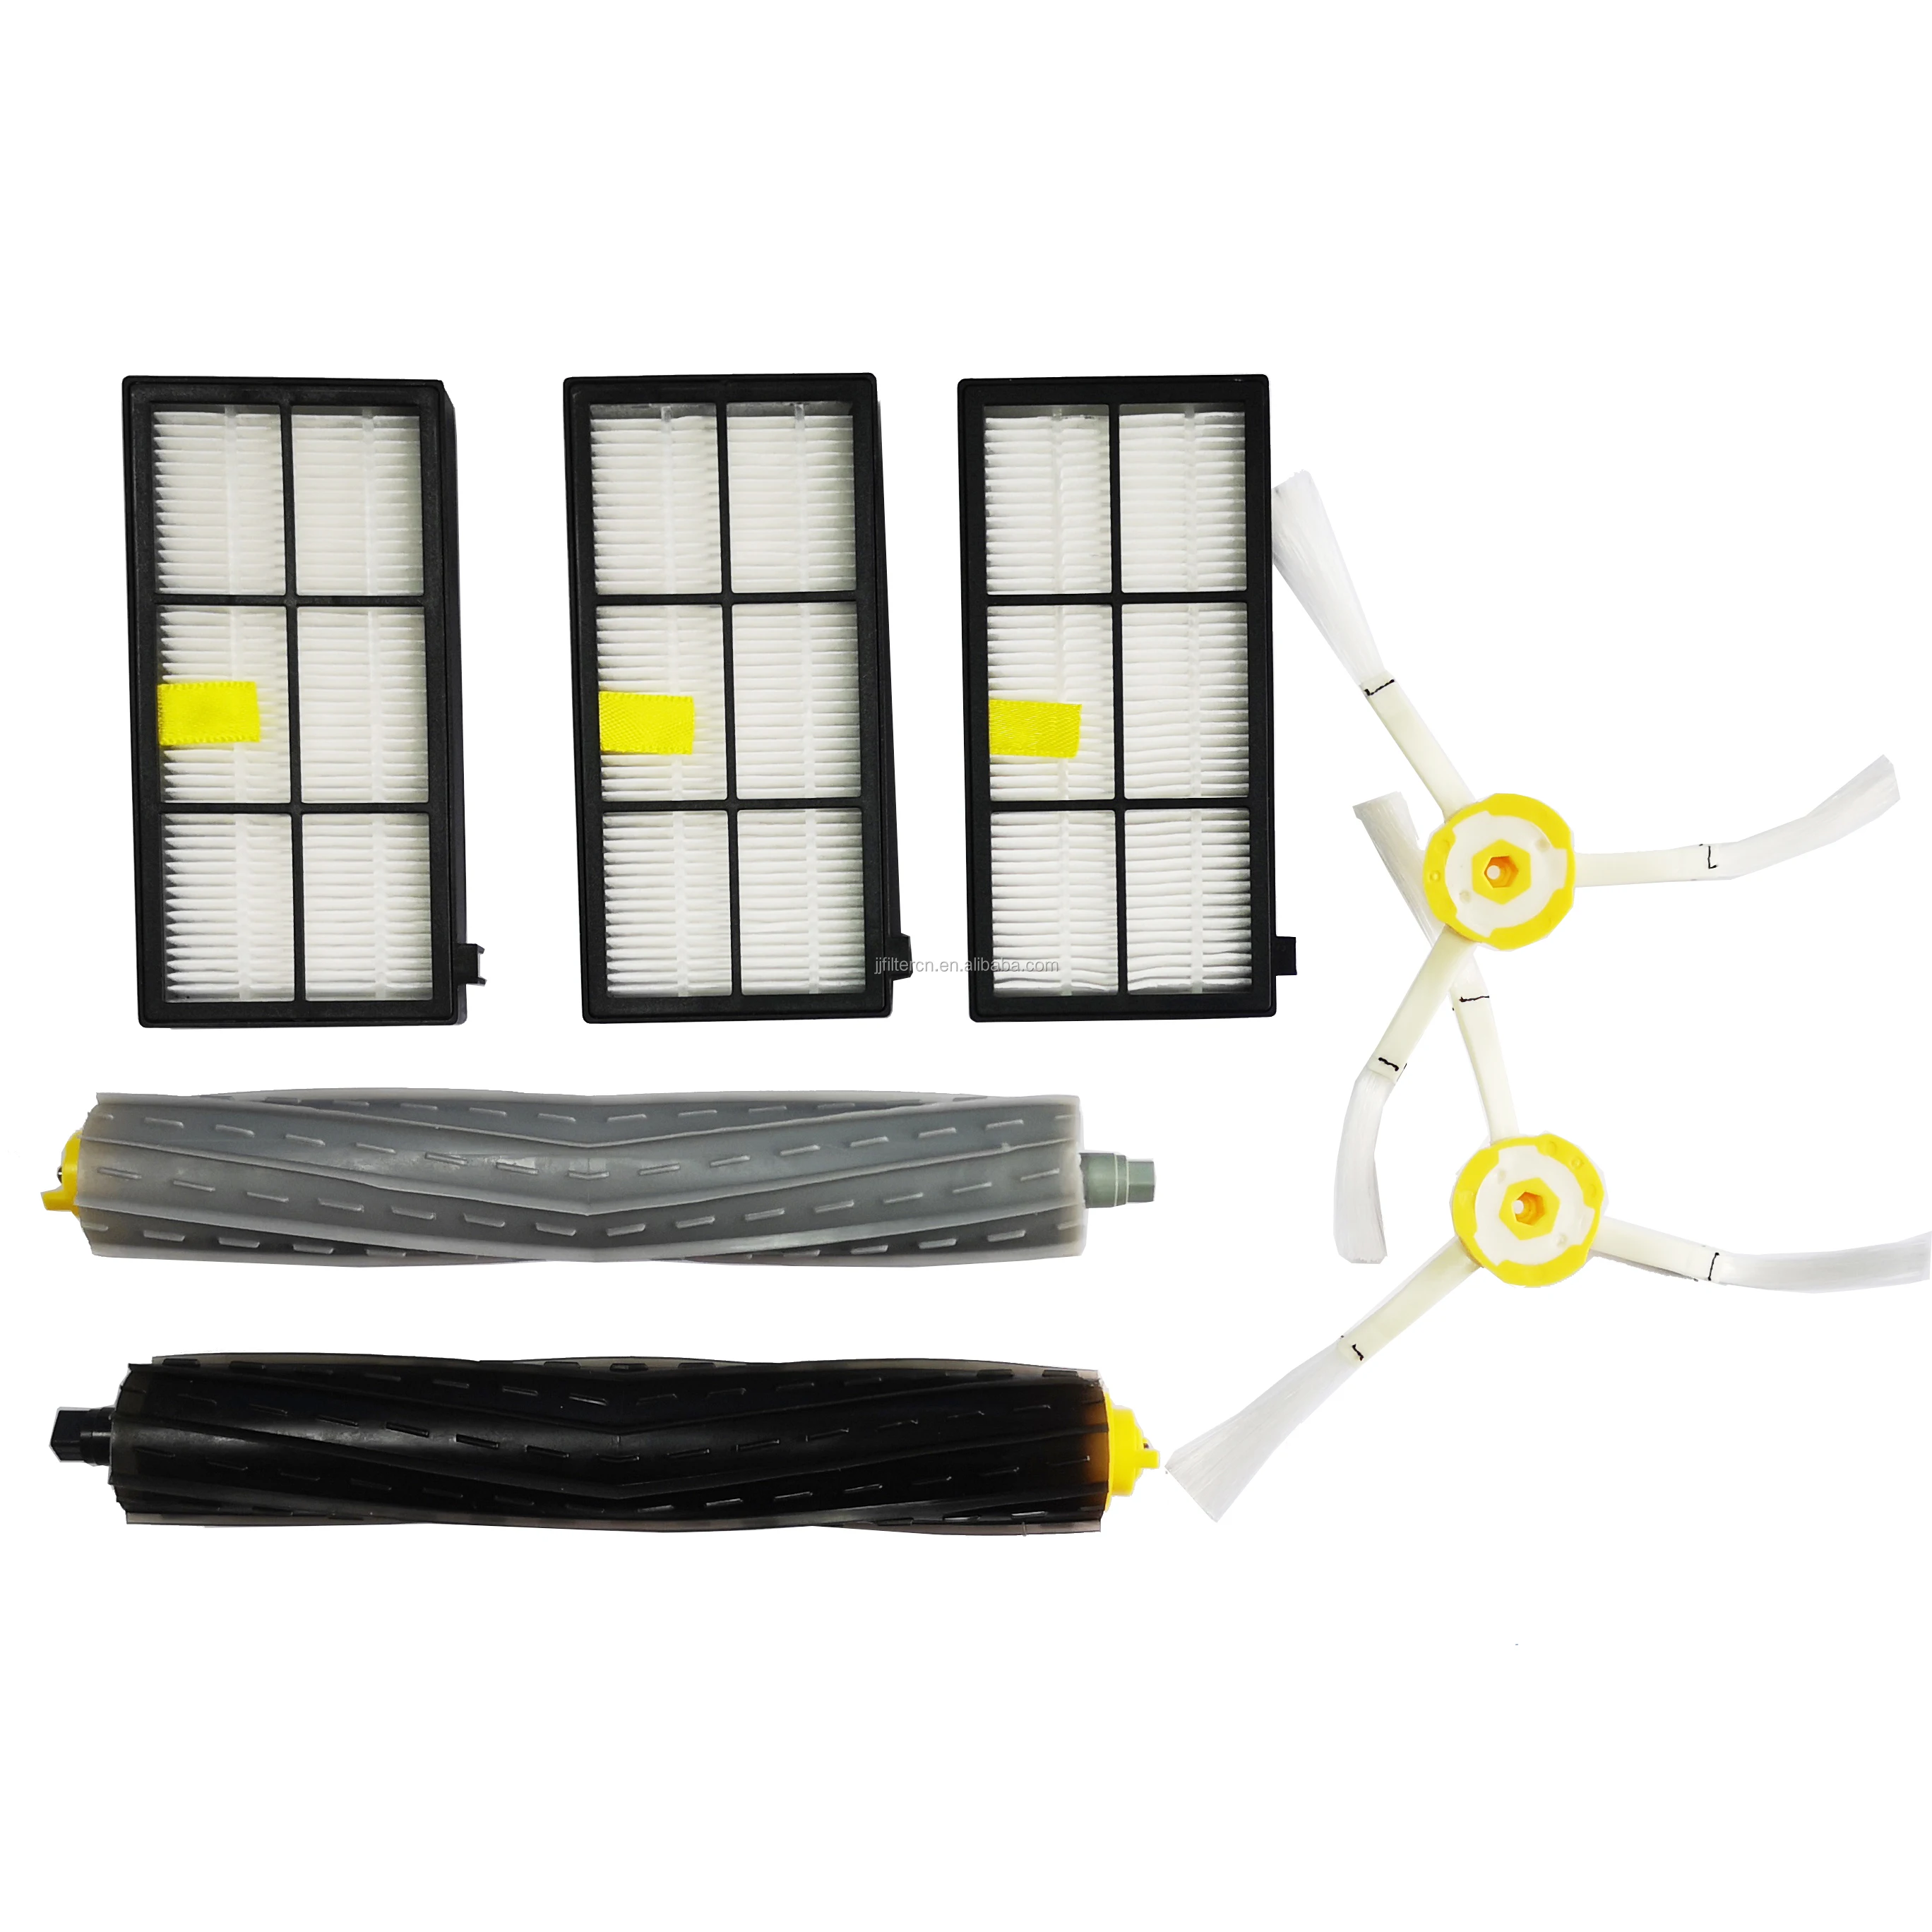 Replacement Brush Kits For Irobot Roomba 800 870 880 900 Series Vacuum Cleaner